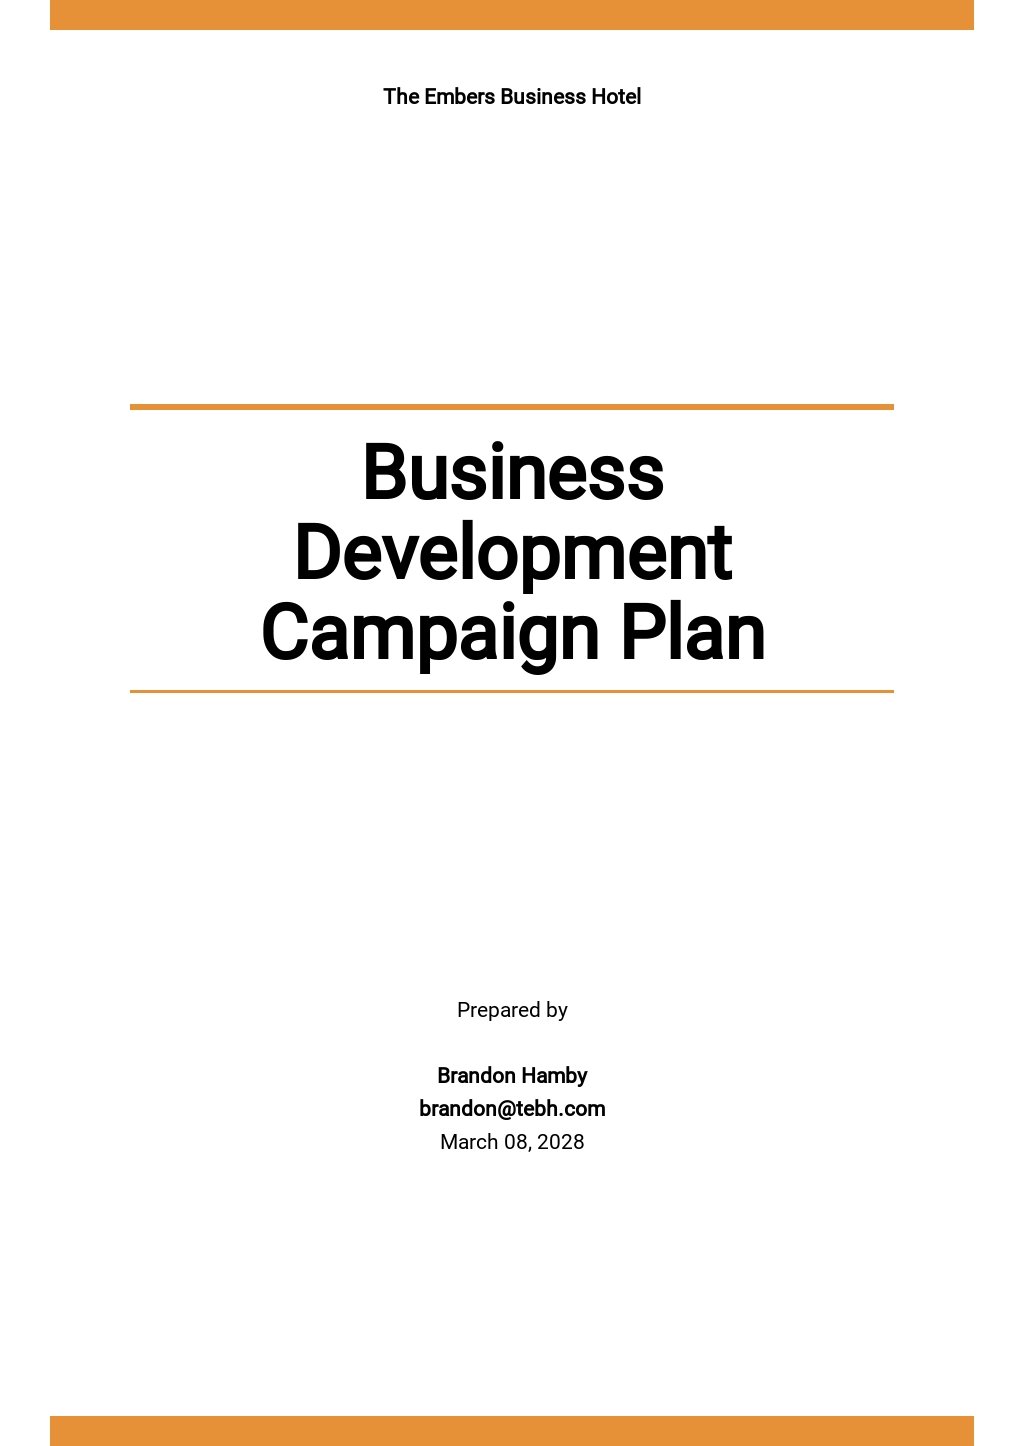 Business Development Campaign Plan Template